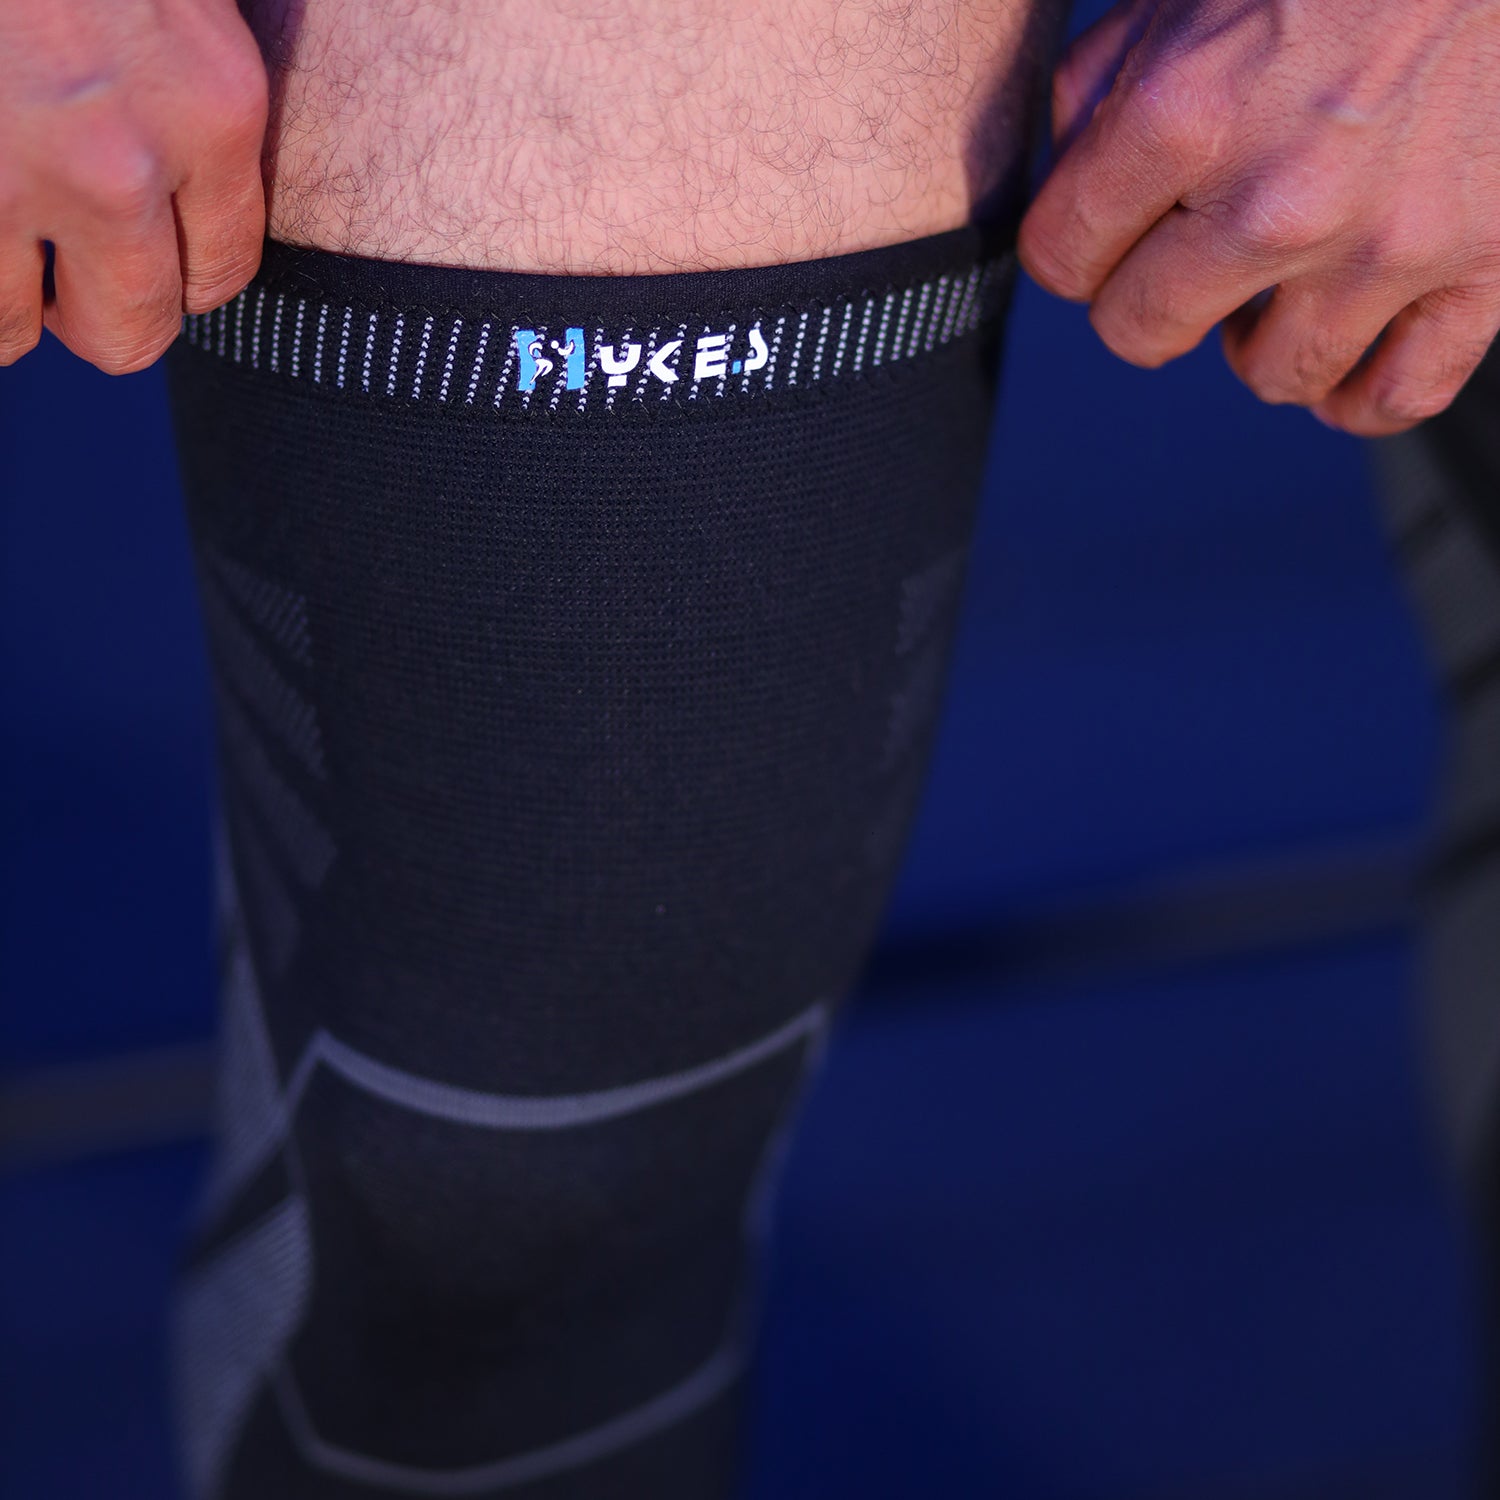 BAUERFEIND Sports Compression Sleeves Lower Leg